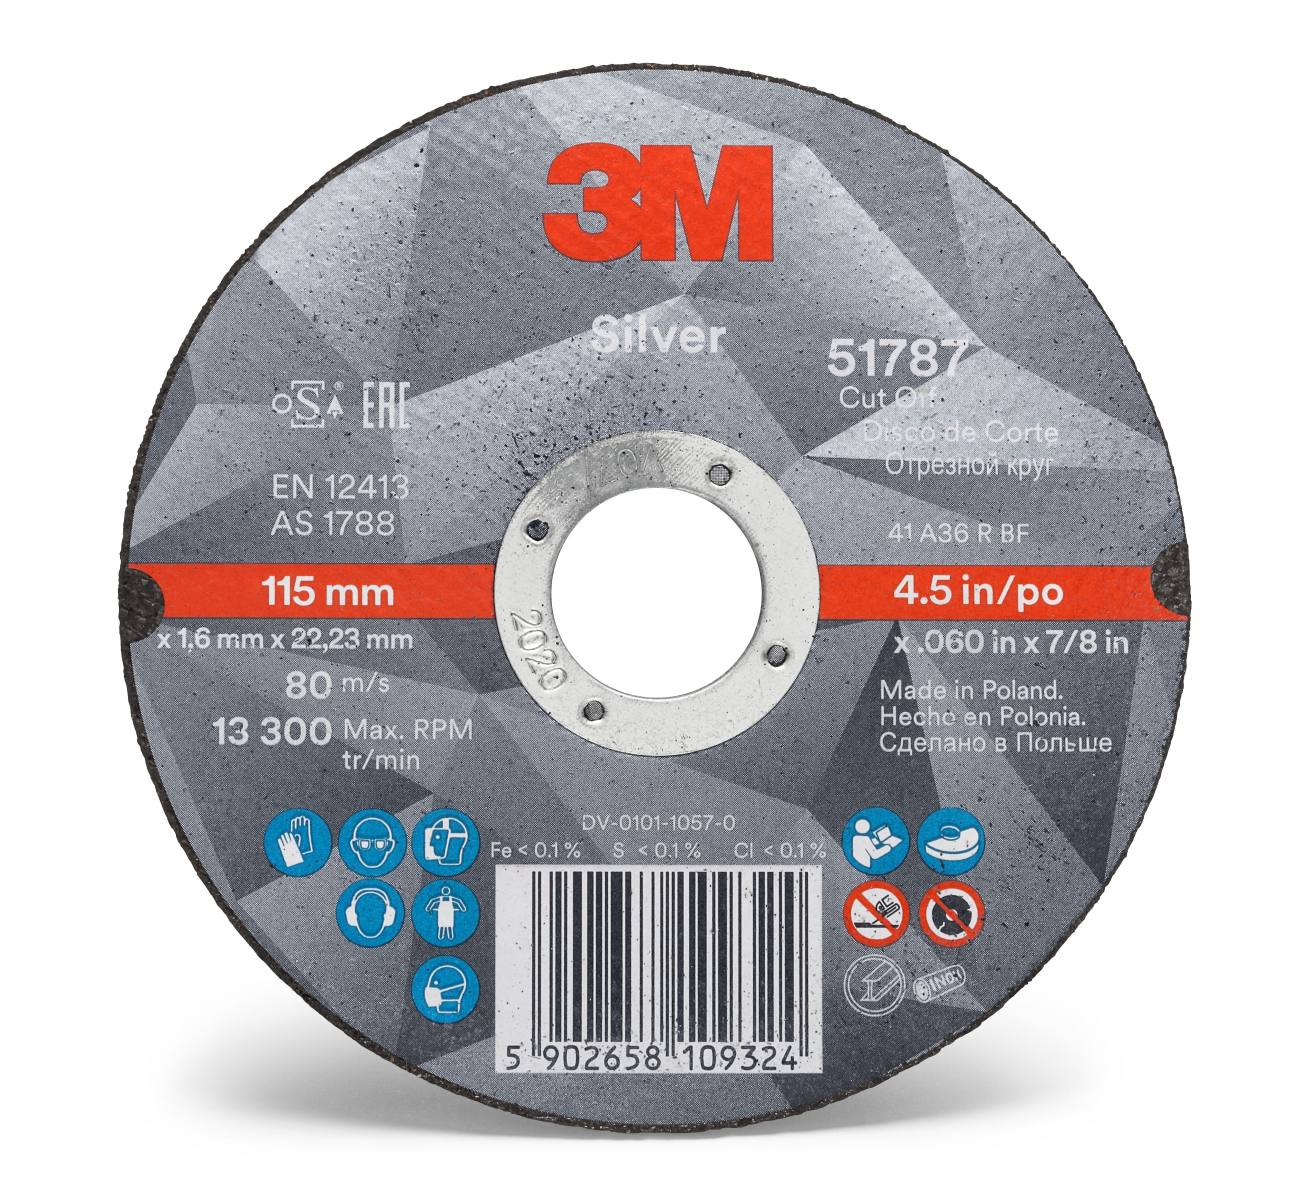 Disco da taglio 3M Silver Cut-Off, 115 mm, 1,0 mm, 22,23 mm, T41, 51785